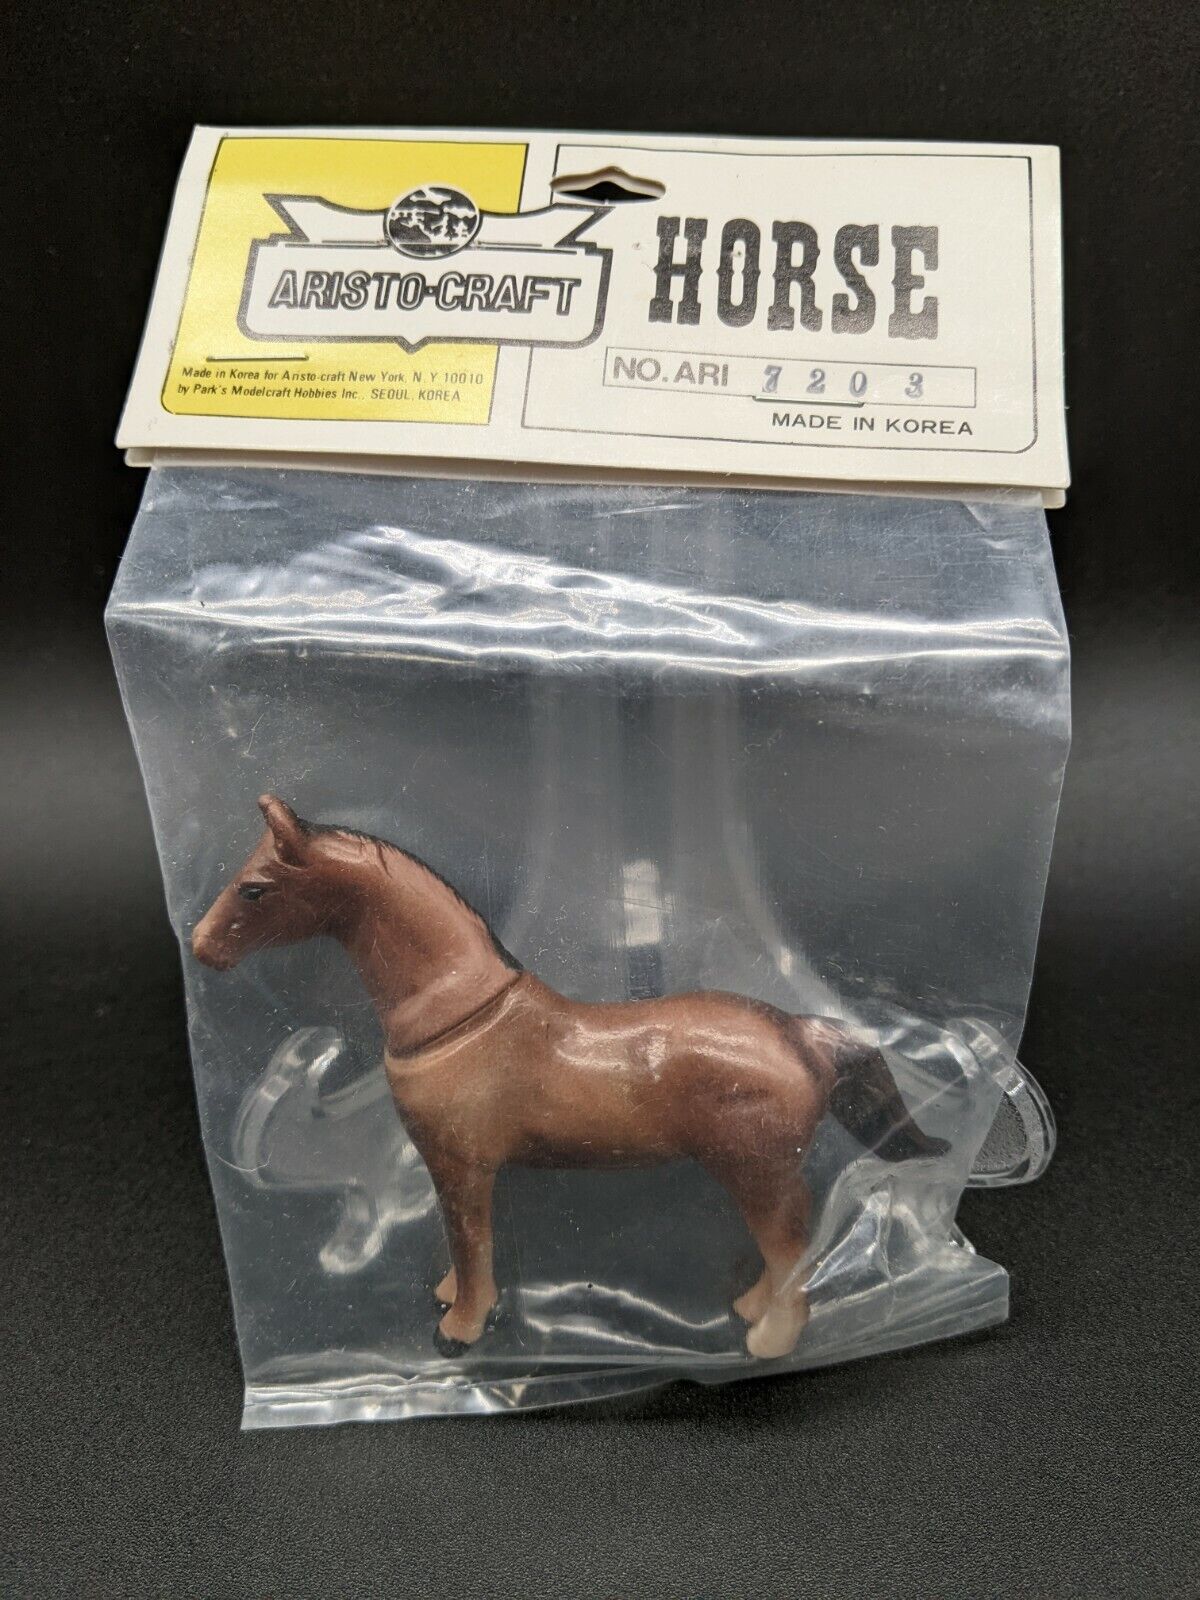 Aristo-Craft Ari 7203 G Brown Horse Figure NOS Made in Seoul, Korea